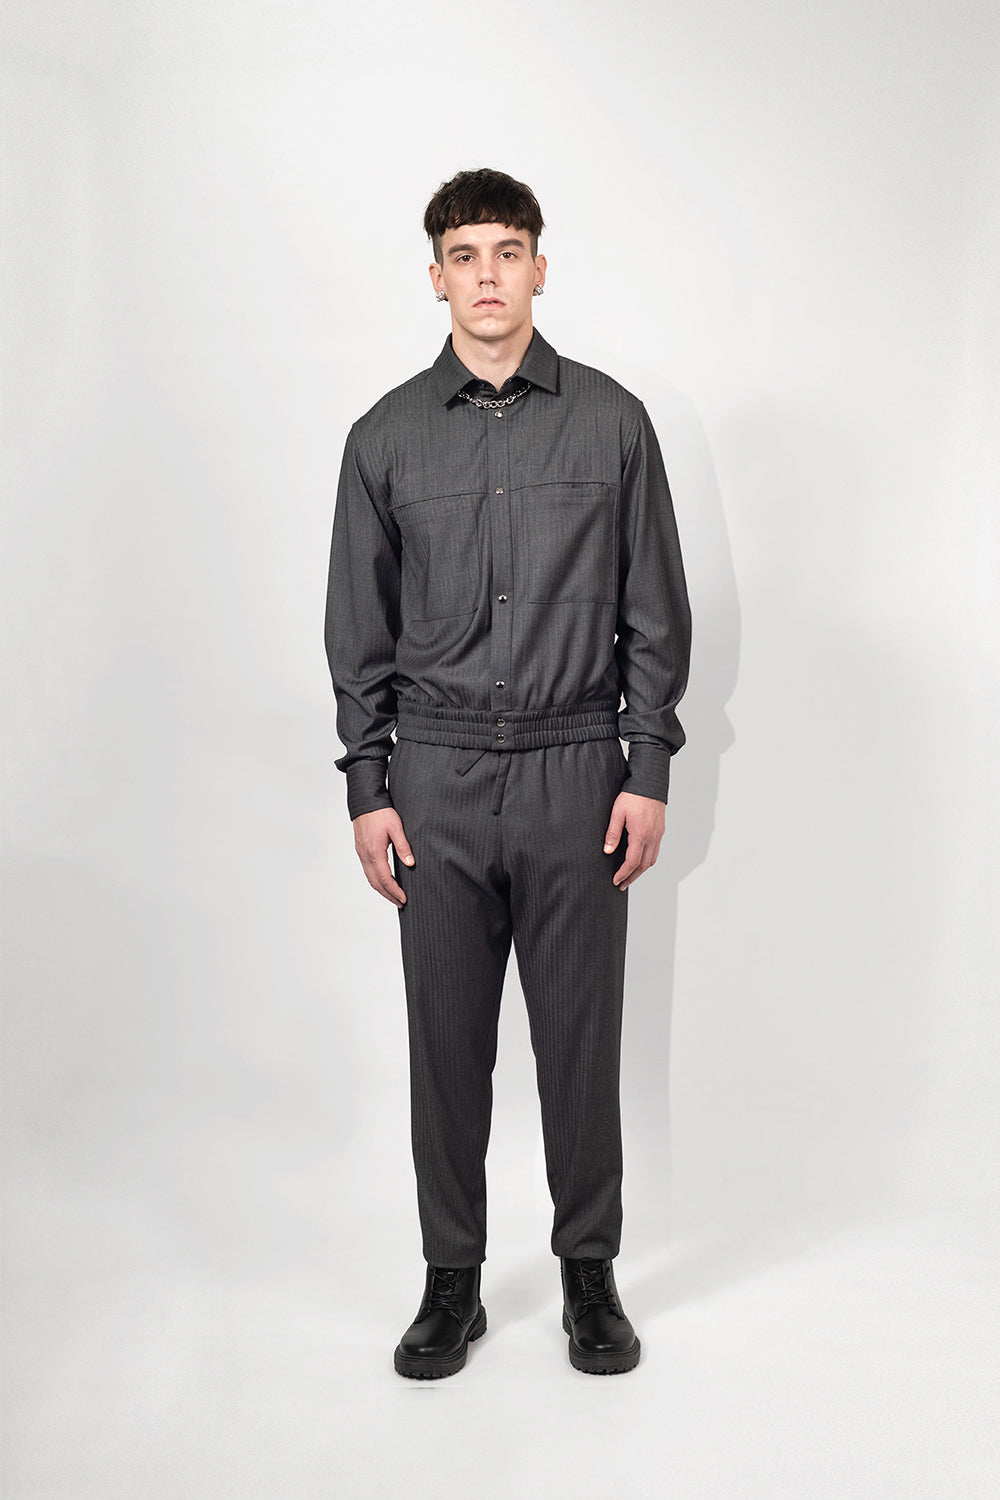 SEANNUNG - MEN - Jacket Style Striped Shirt 直條外套式長袖襯衫